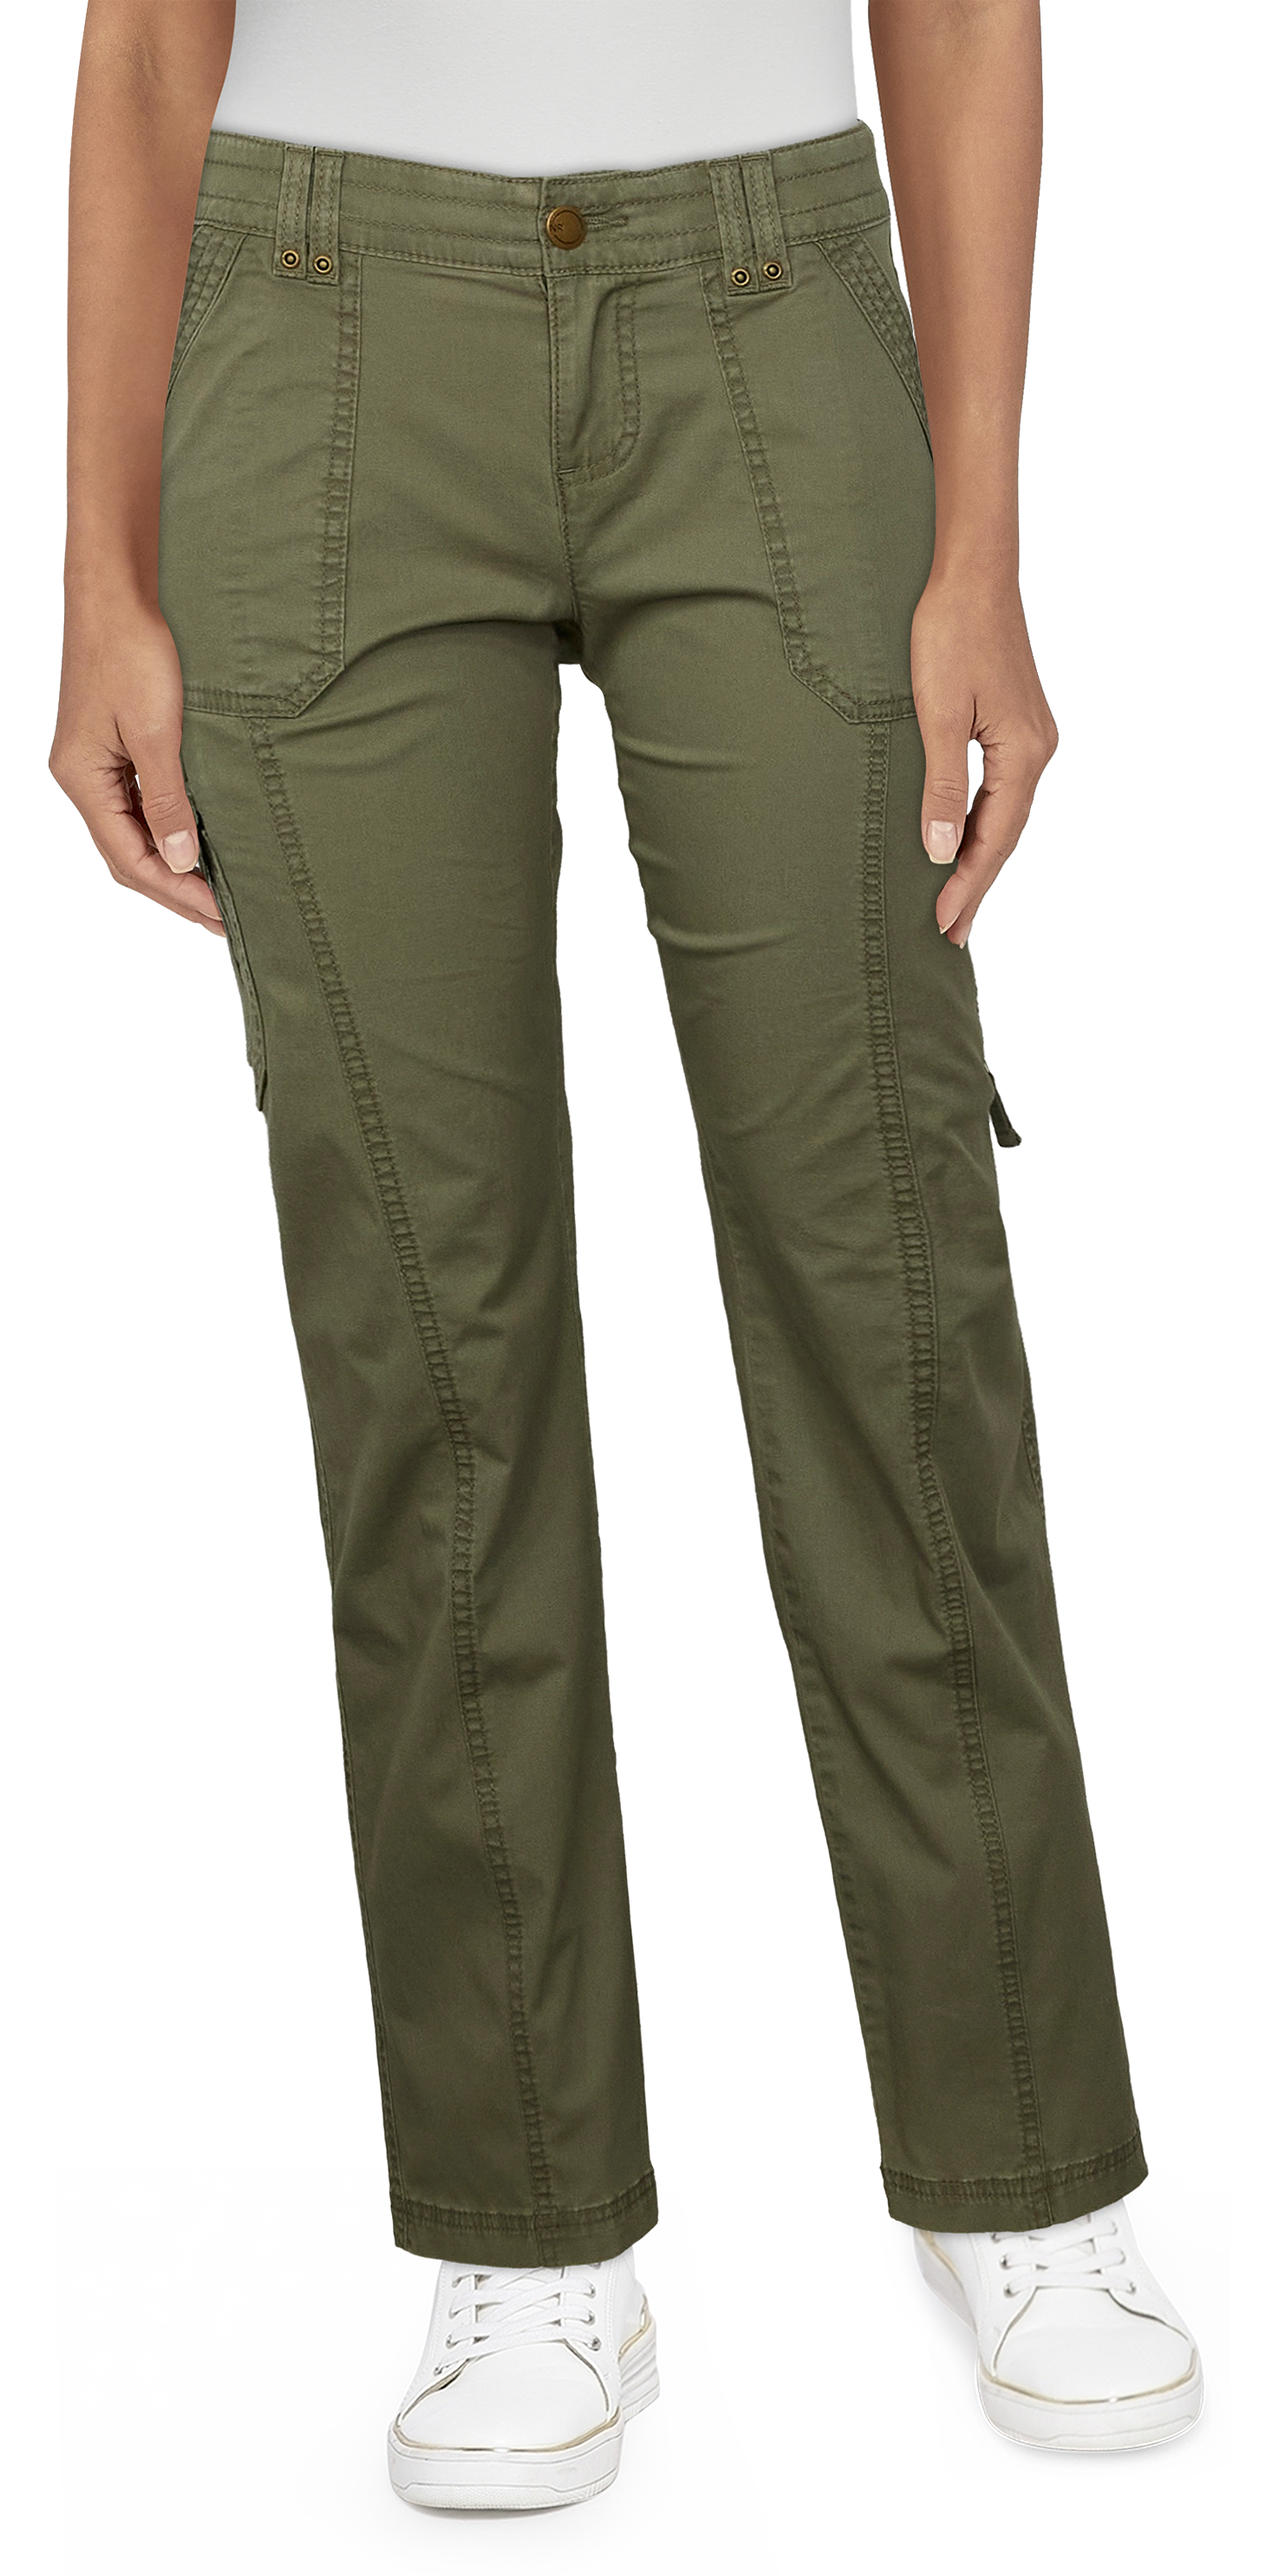 Natural Reflections Capris Pants Women's Size 14 Green 6 Pockets